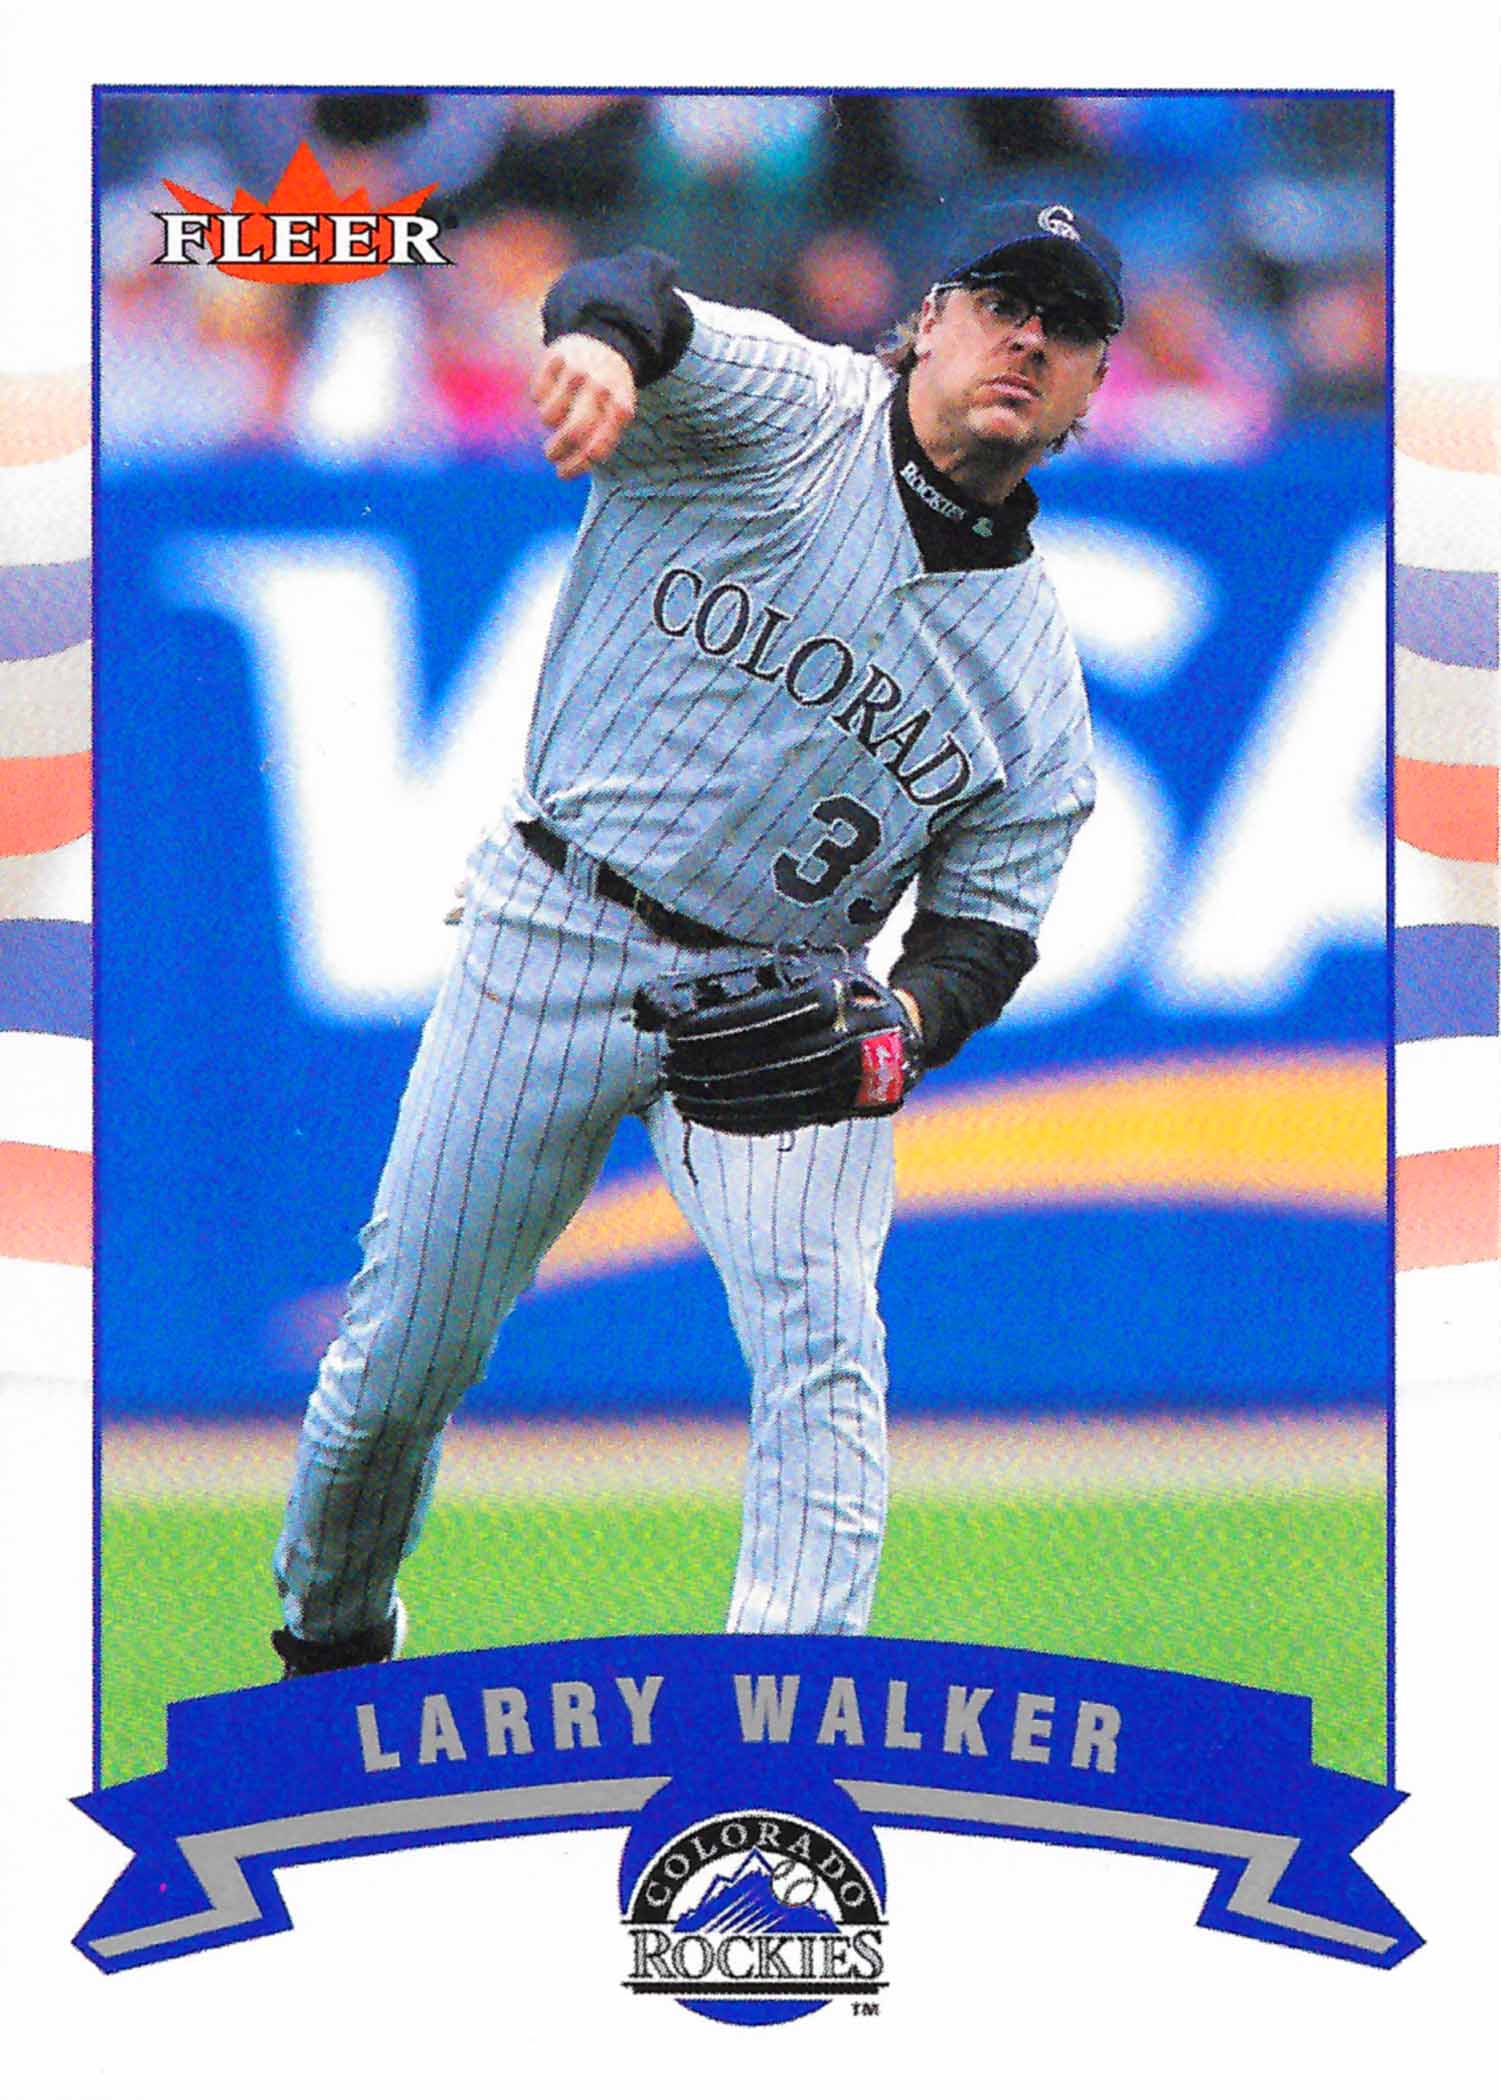 2002 Upper Deck Larry Walker Rockies Game Used Jersey Insert